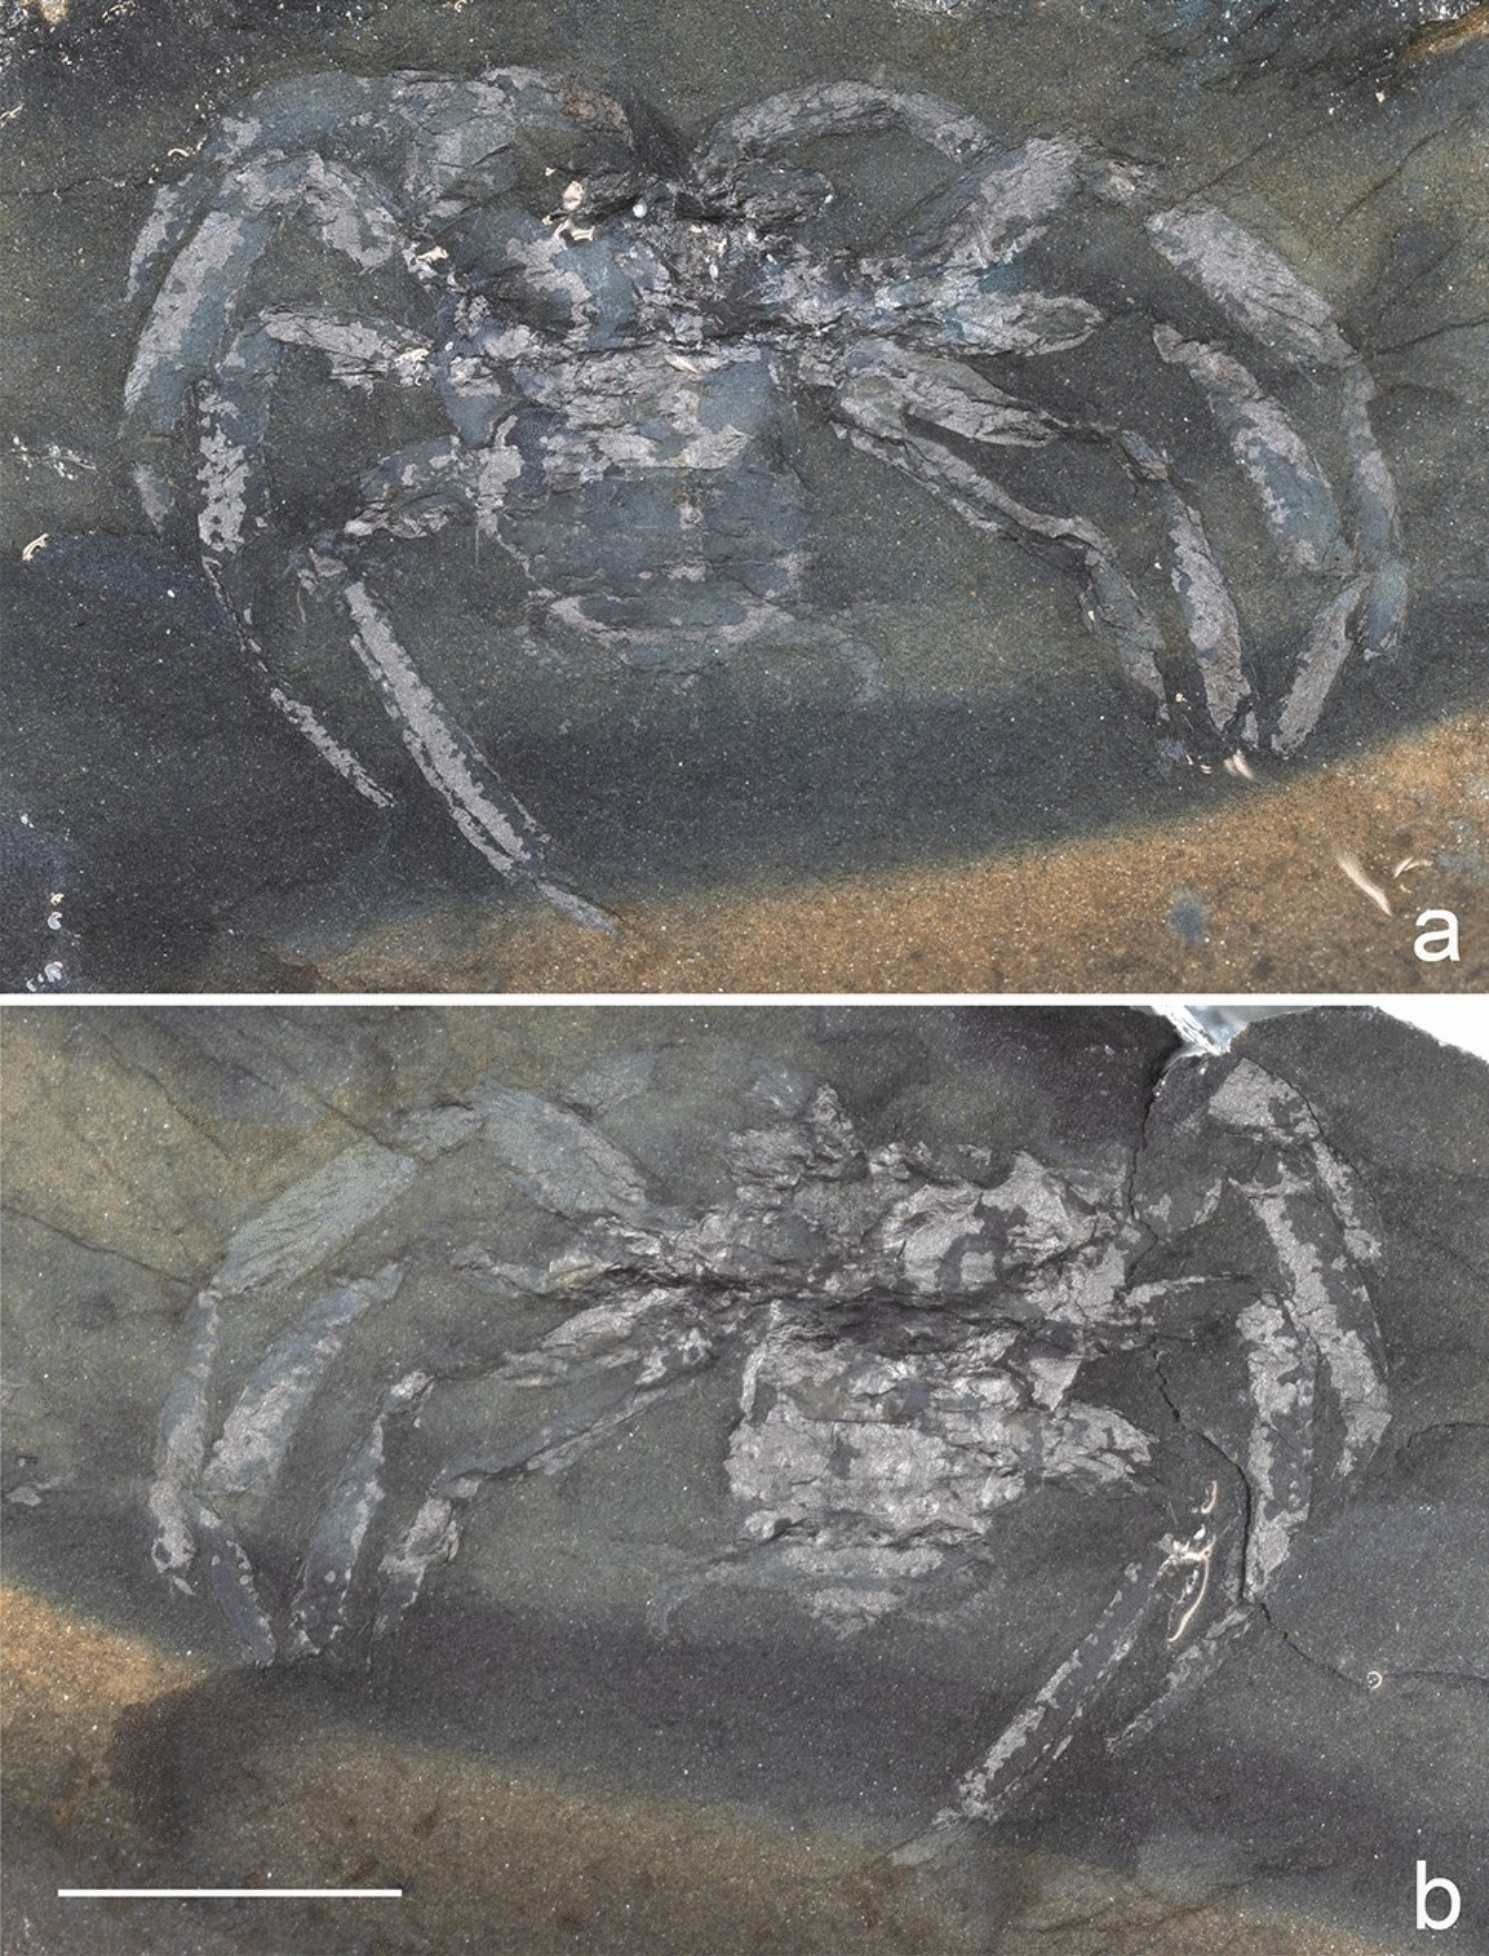 Arthrolycosa wolterbeeki sp. nov., la araña fósil más antigua (Arachnida: Araneae) de Alemania, del Carbonífero tardío de Piesberg cerca de Osnabrück, Baja Sajonia.